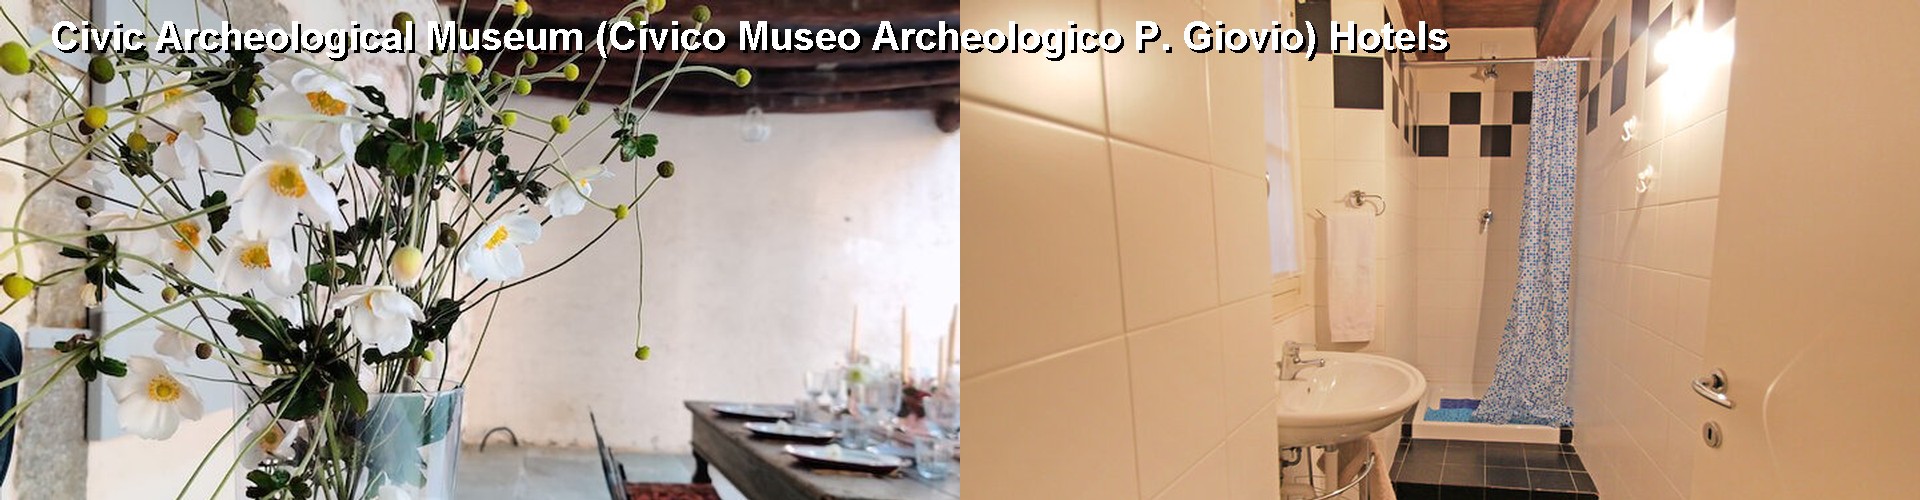 5 Best Hotels near Civic Archeological Museum (Civico Museo Archeologico P. Giovio)